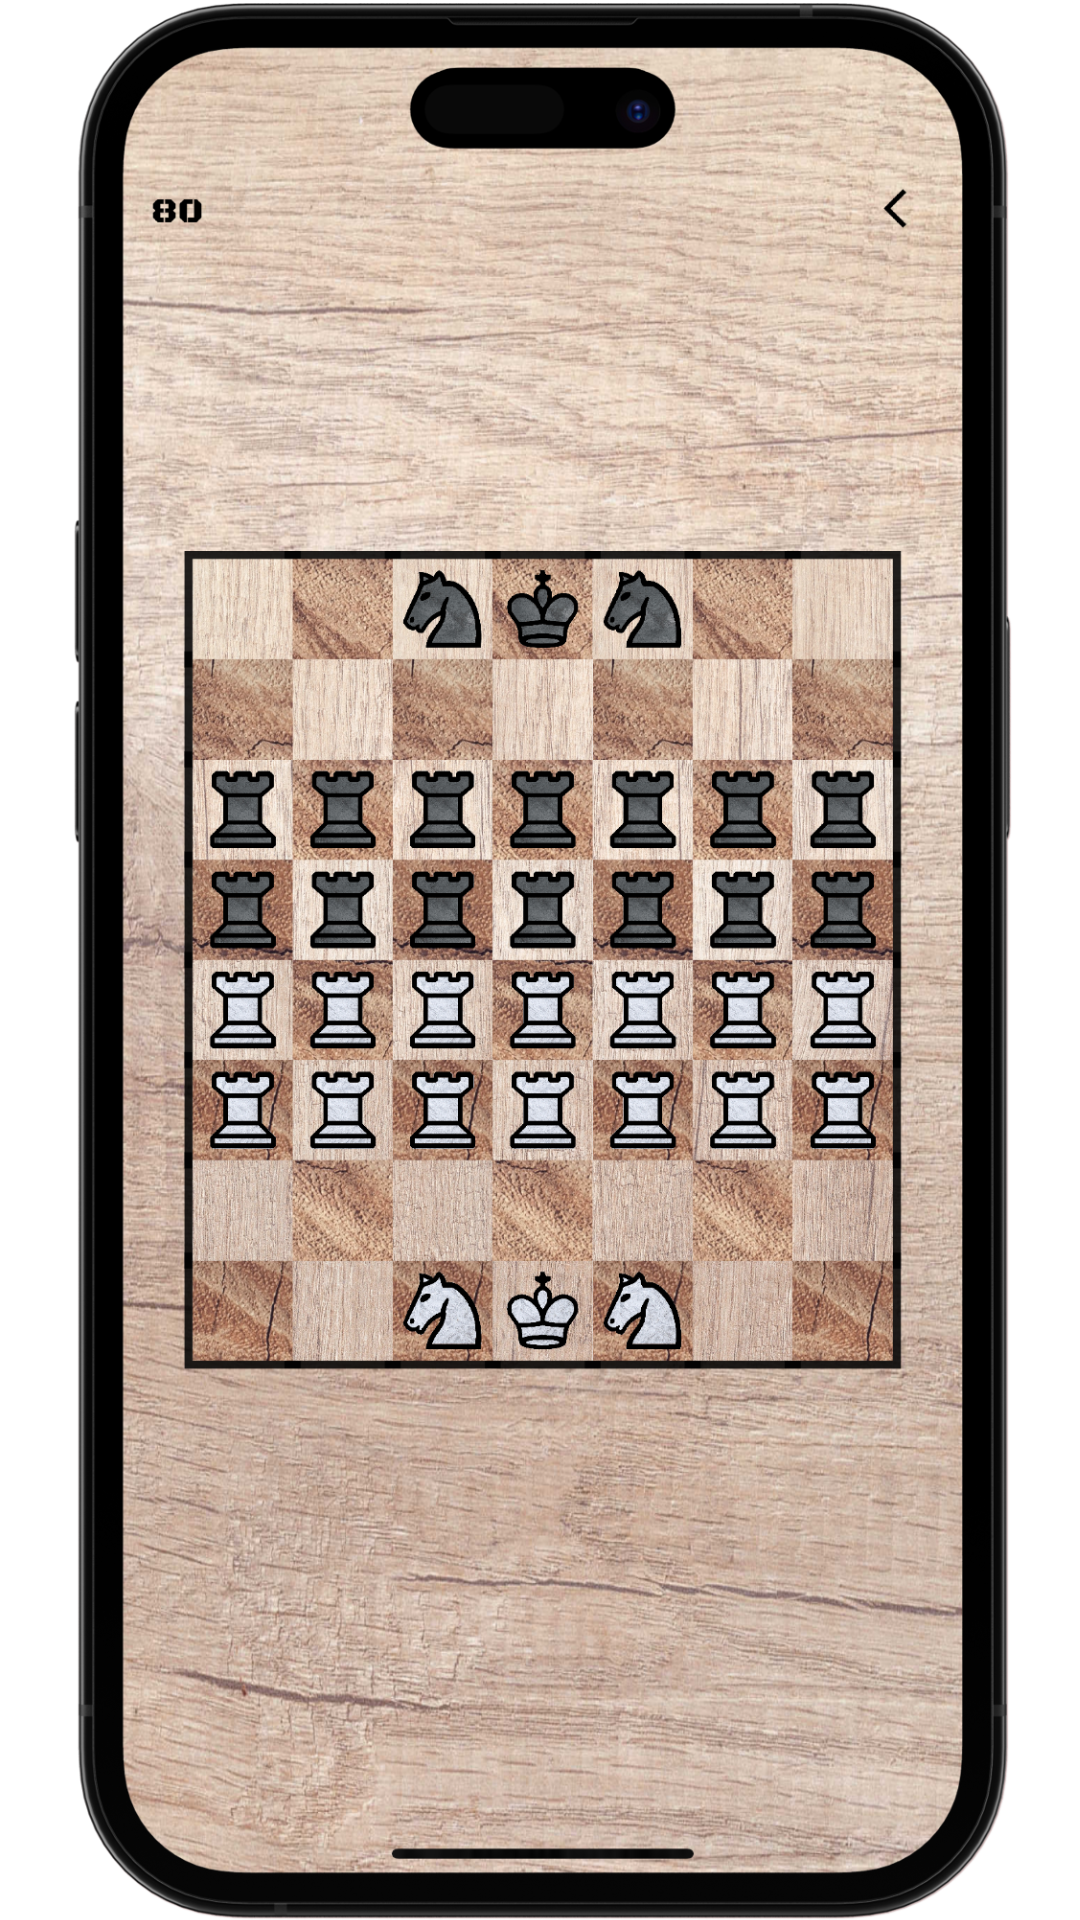 Play epic chess battles